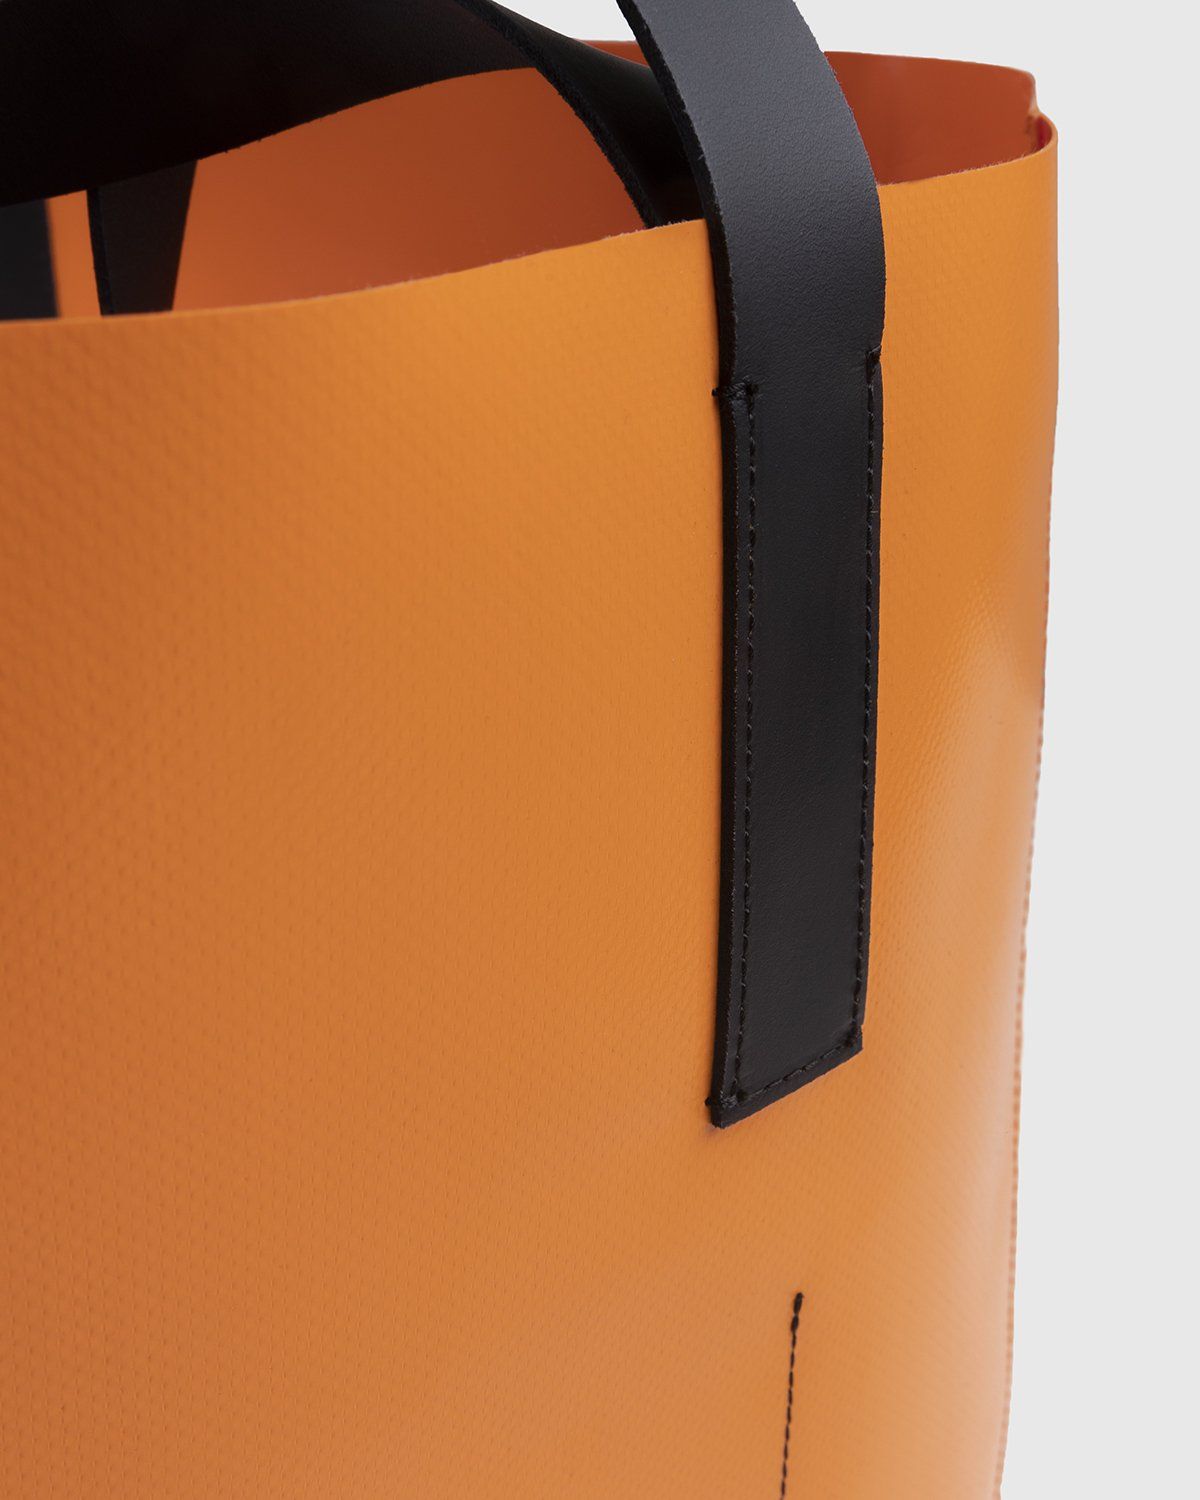 Dries van Noten – Tote Bag Orange - Tote Bags - Orange - Image 4